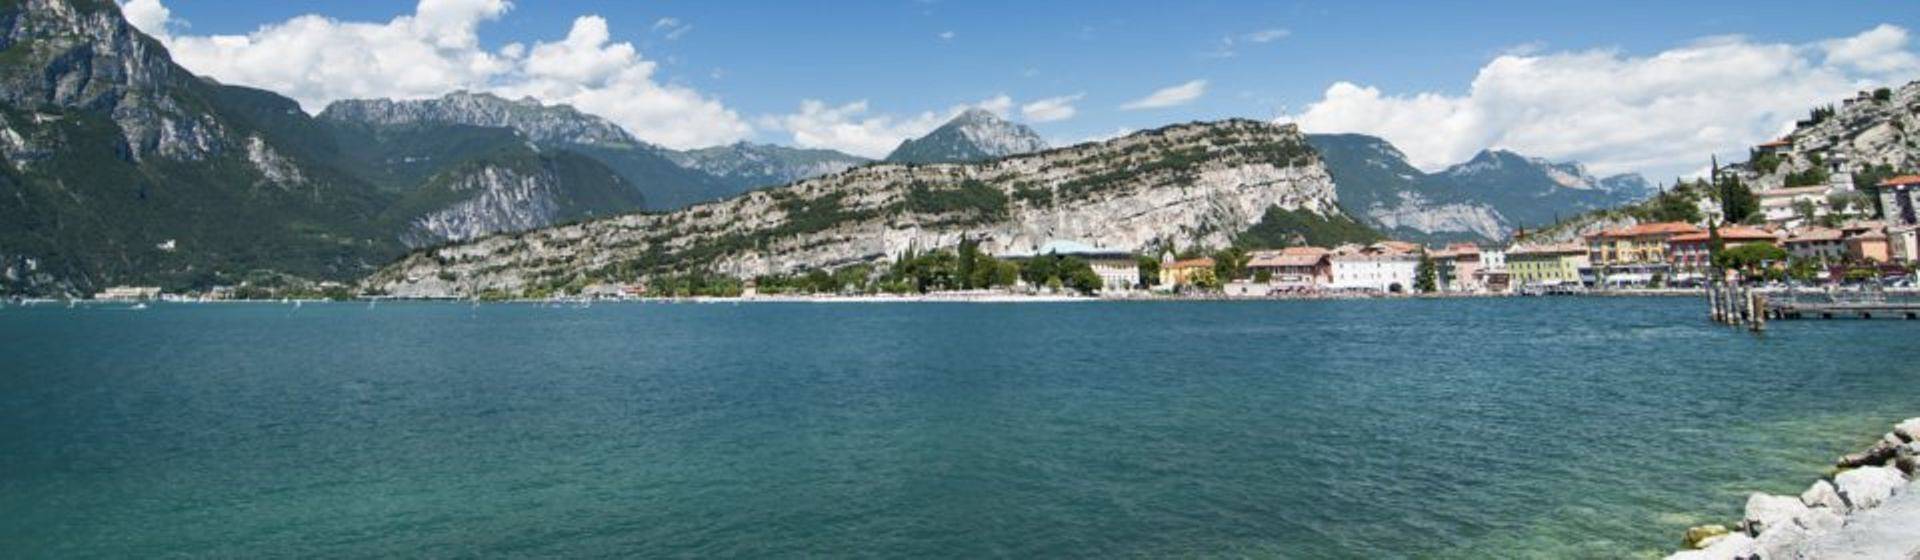 Holidays to Riva Del Garda Image